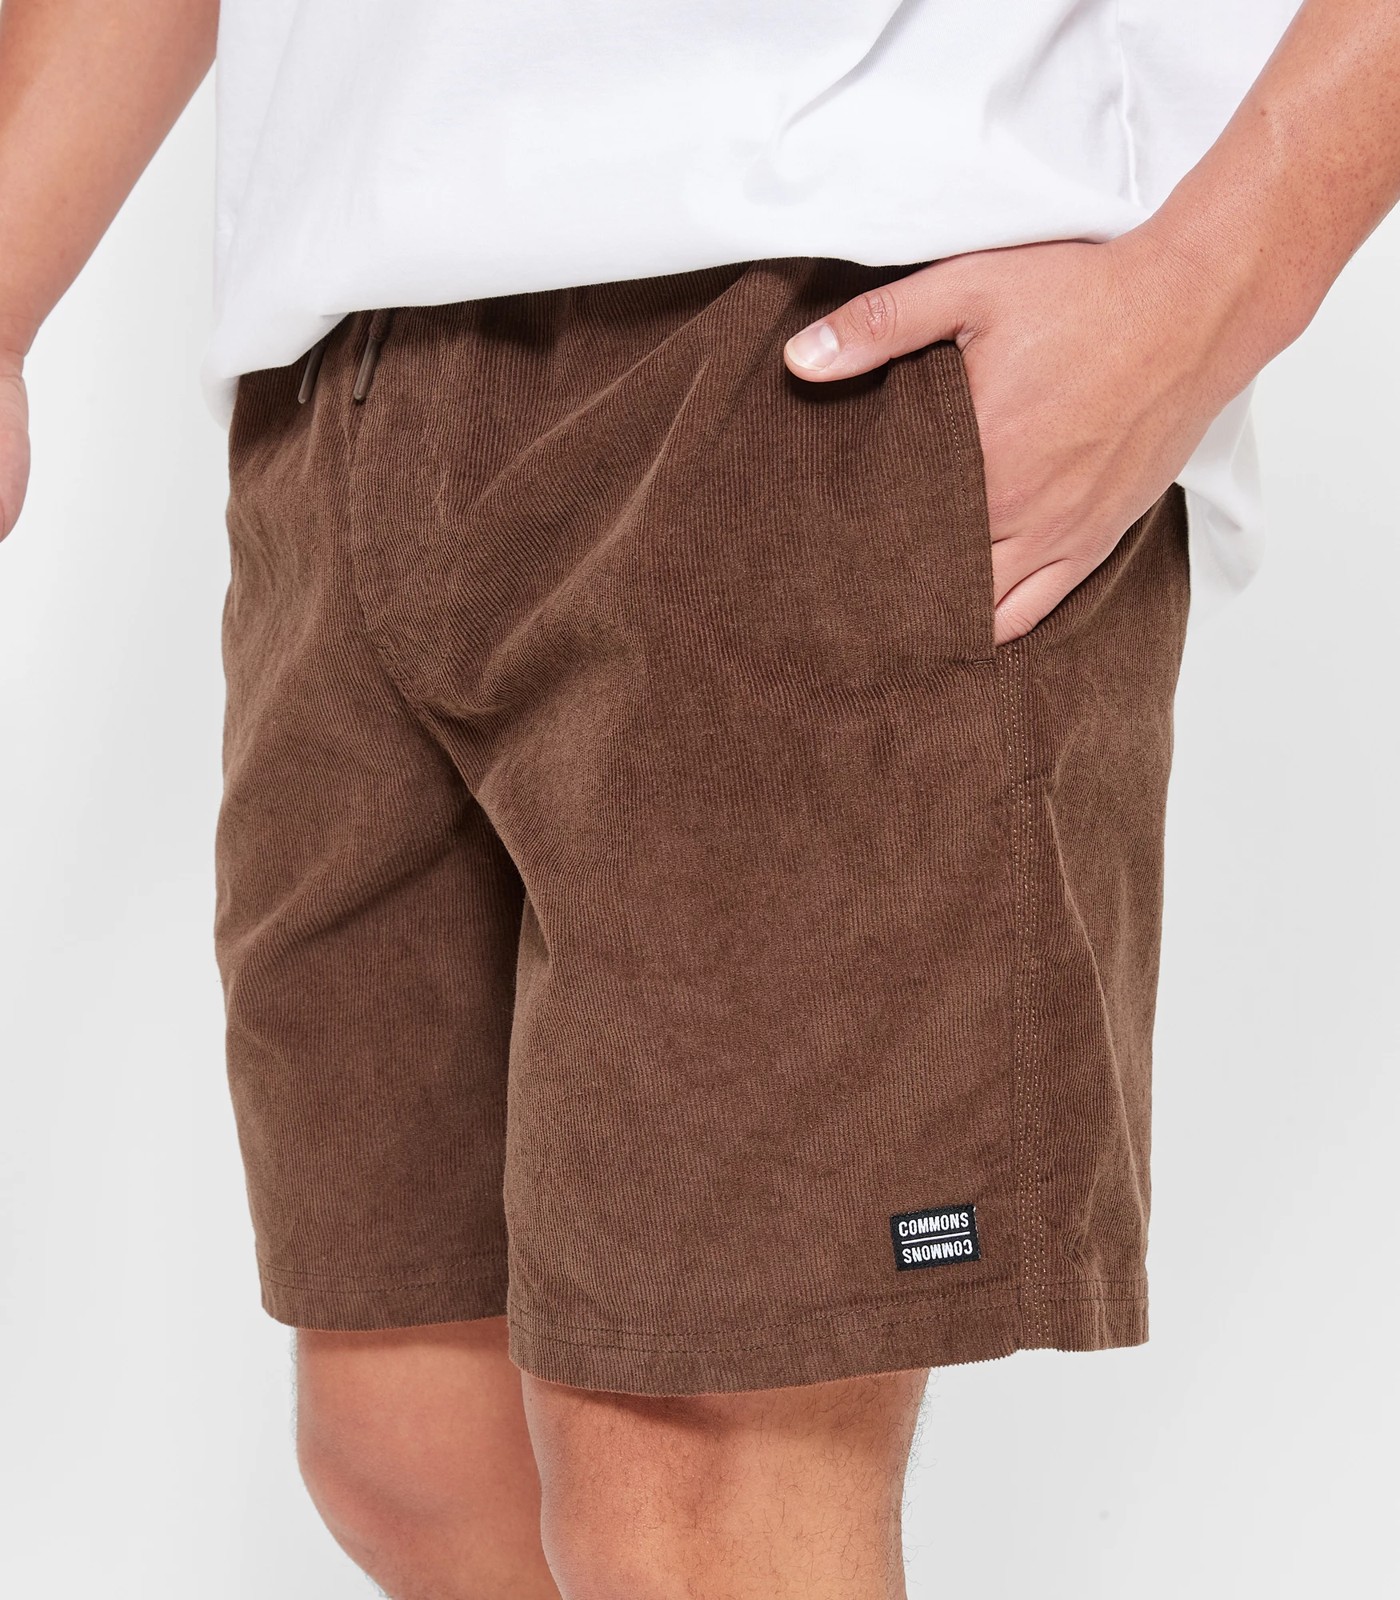 Commons Corduroy Shorts